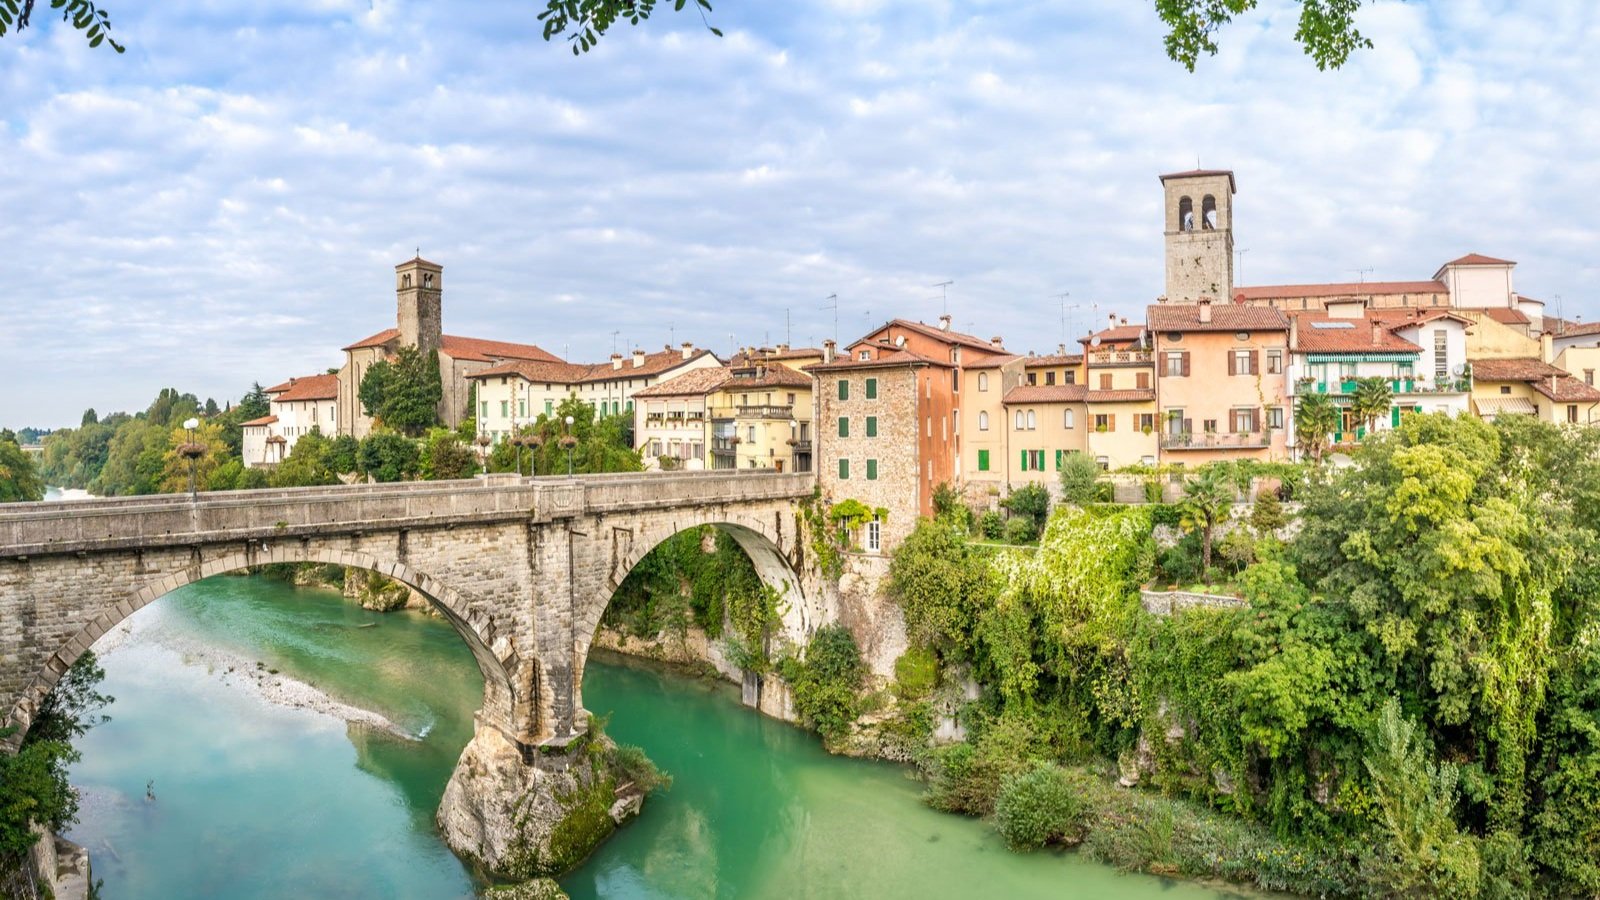 Cividale del Friuli, replete with fascinating Lombard heritage